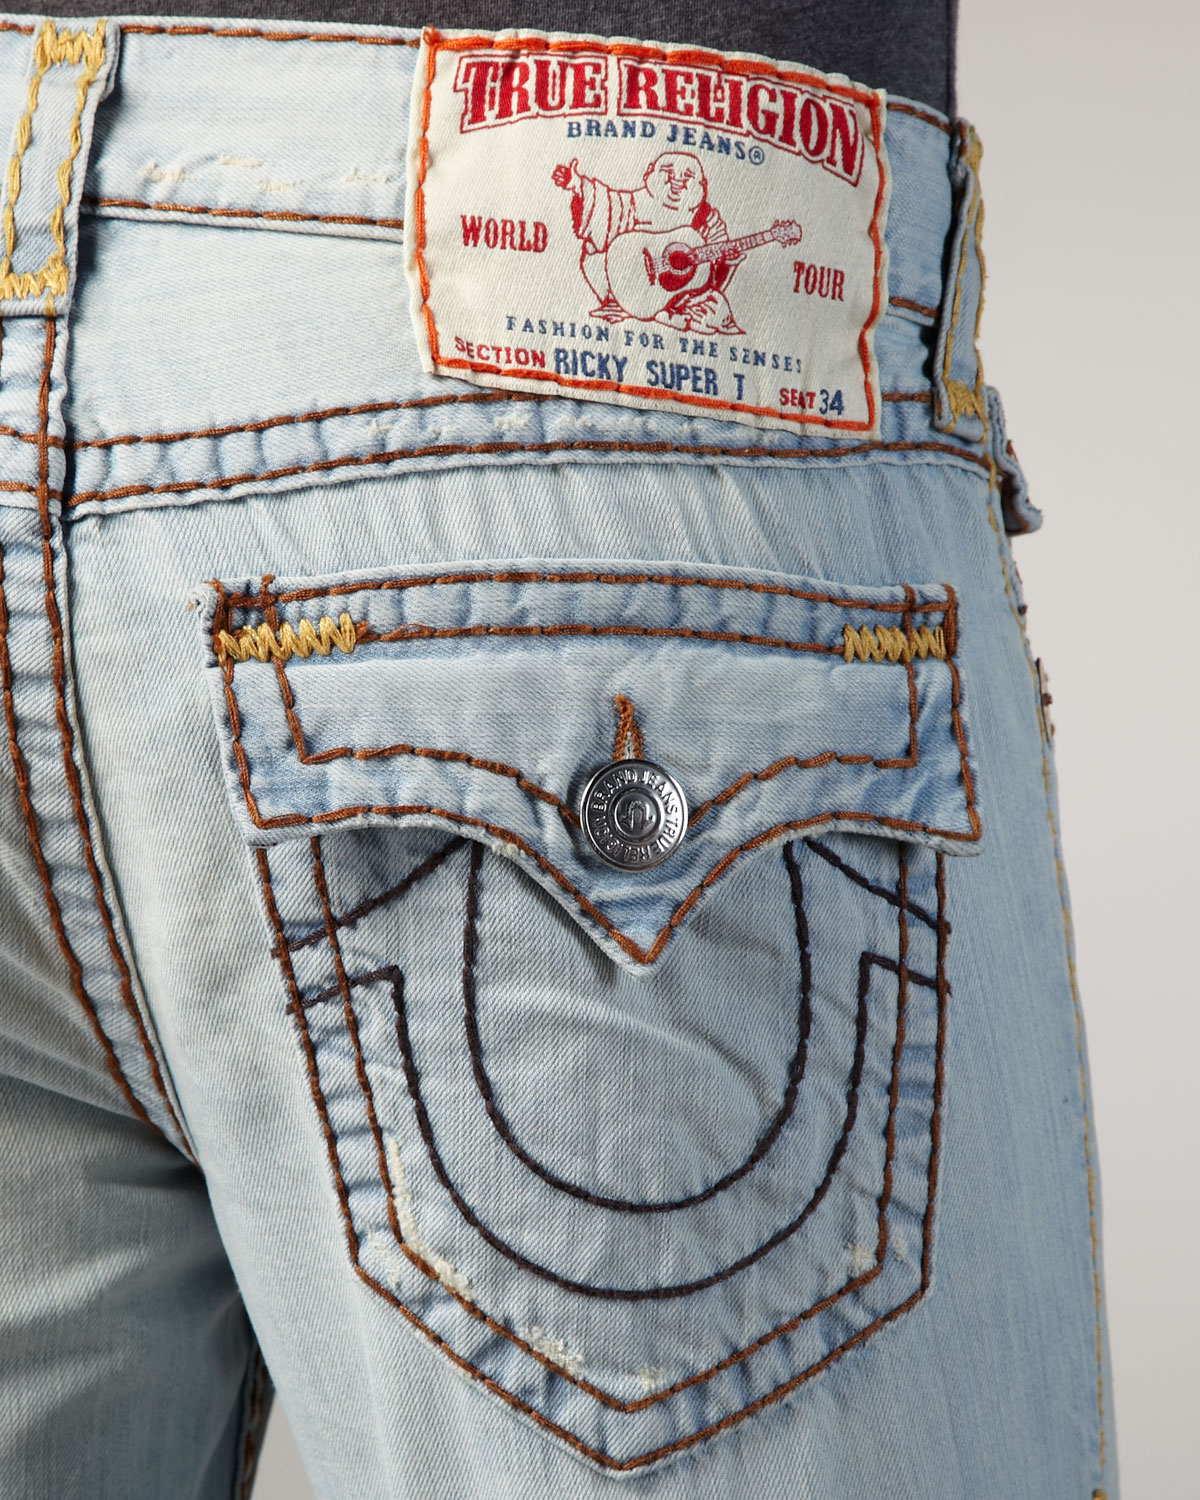 Lyst - True Religion Ricky Super T Tulsa Jeans in Gray for Men